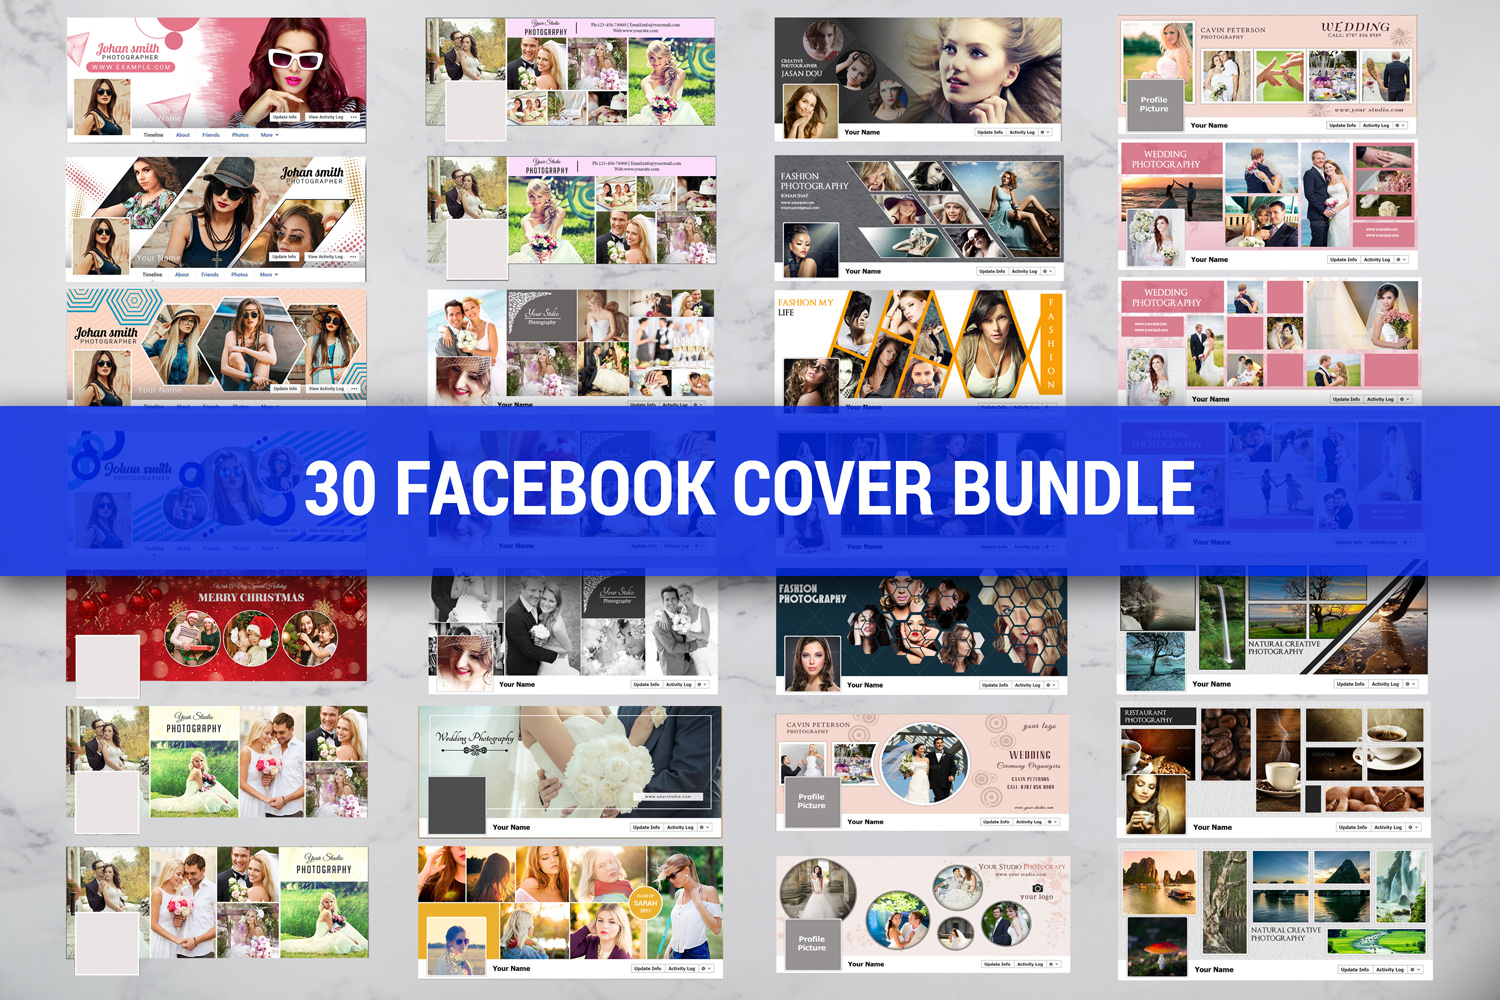 Facebook Cover Bundle Social Media Template